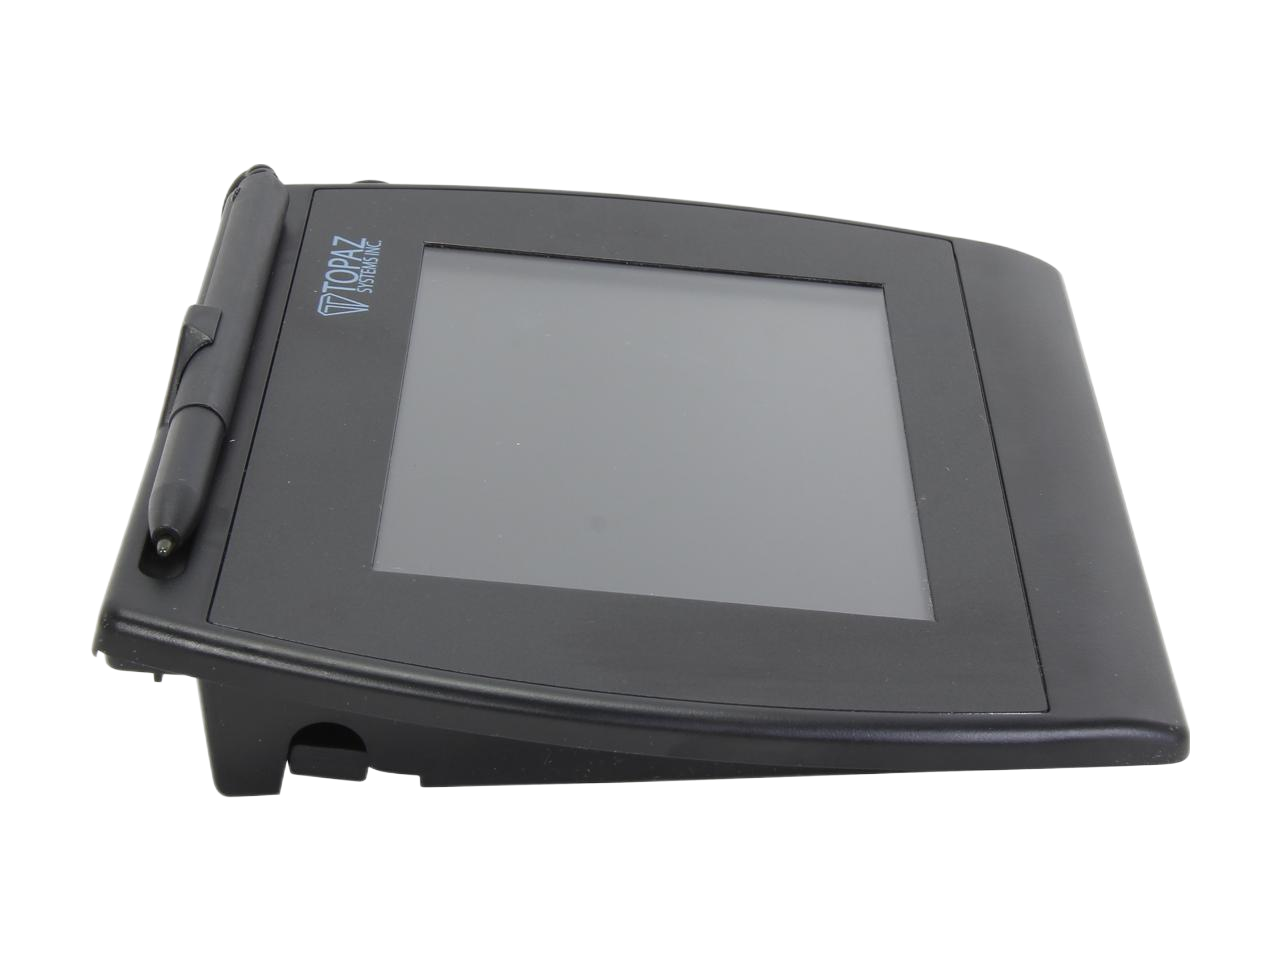 Topaz SignatureGem LCD 4x5 T-LBK766SE Series Dual Serial/USB (High Speed) BackLit T-LBK766SE-BHSB-R Signature Capture Pad (Refurbished)